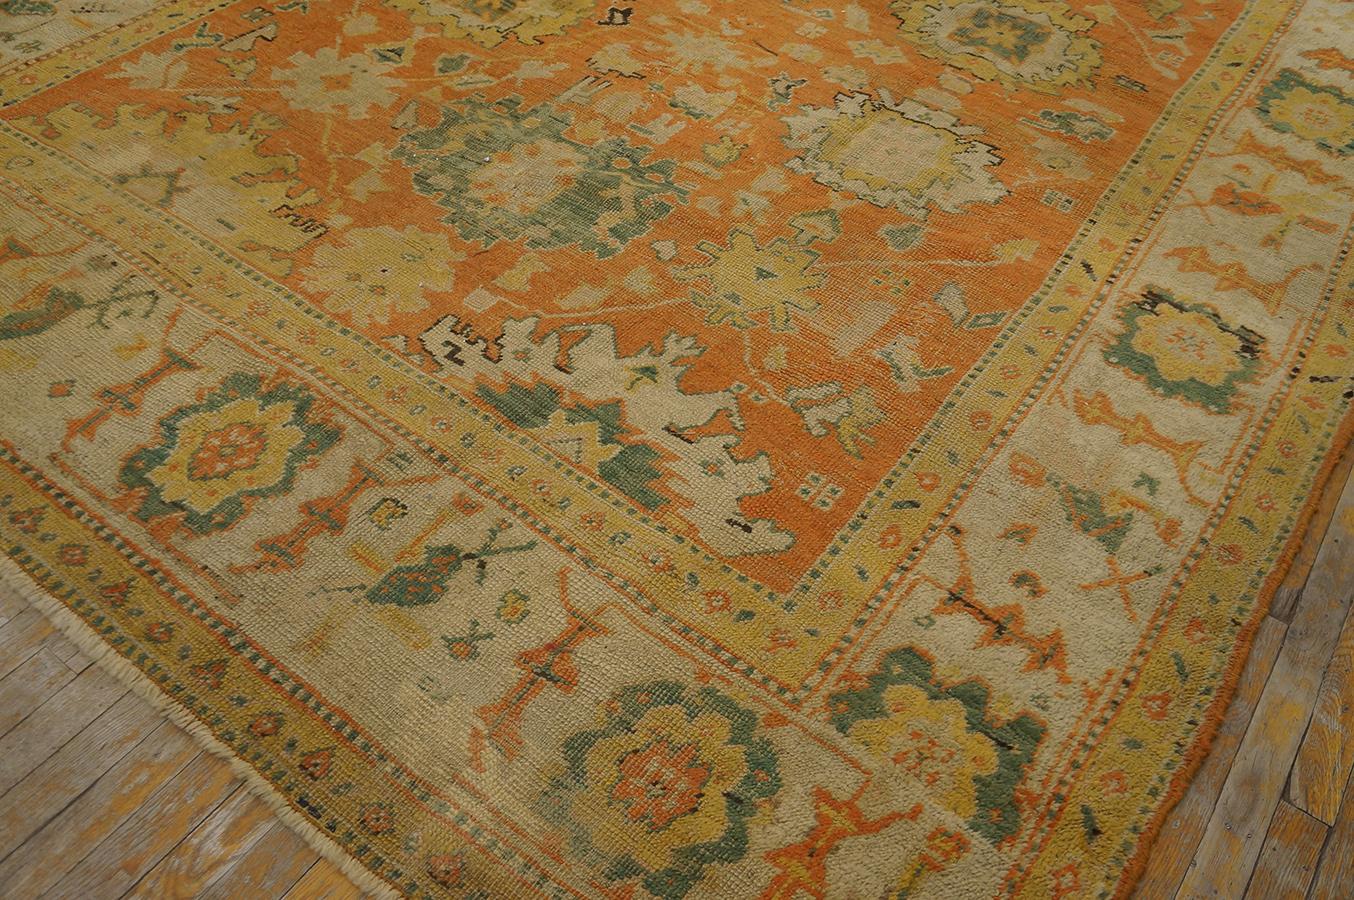 Late 19th Century Turkish Anatolian Oushak Carpet (8'4''x 11'2'' - 254 x 340 cm) For Sale 1